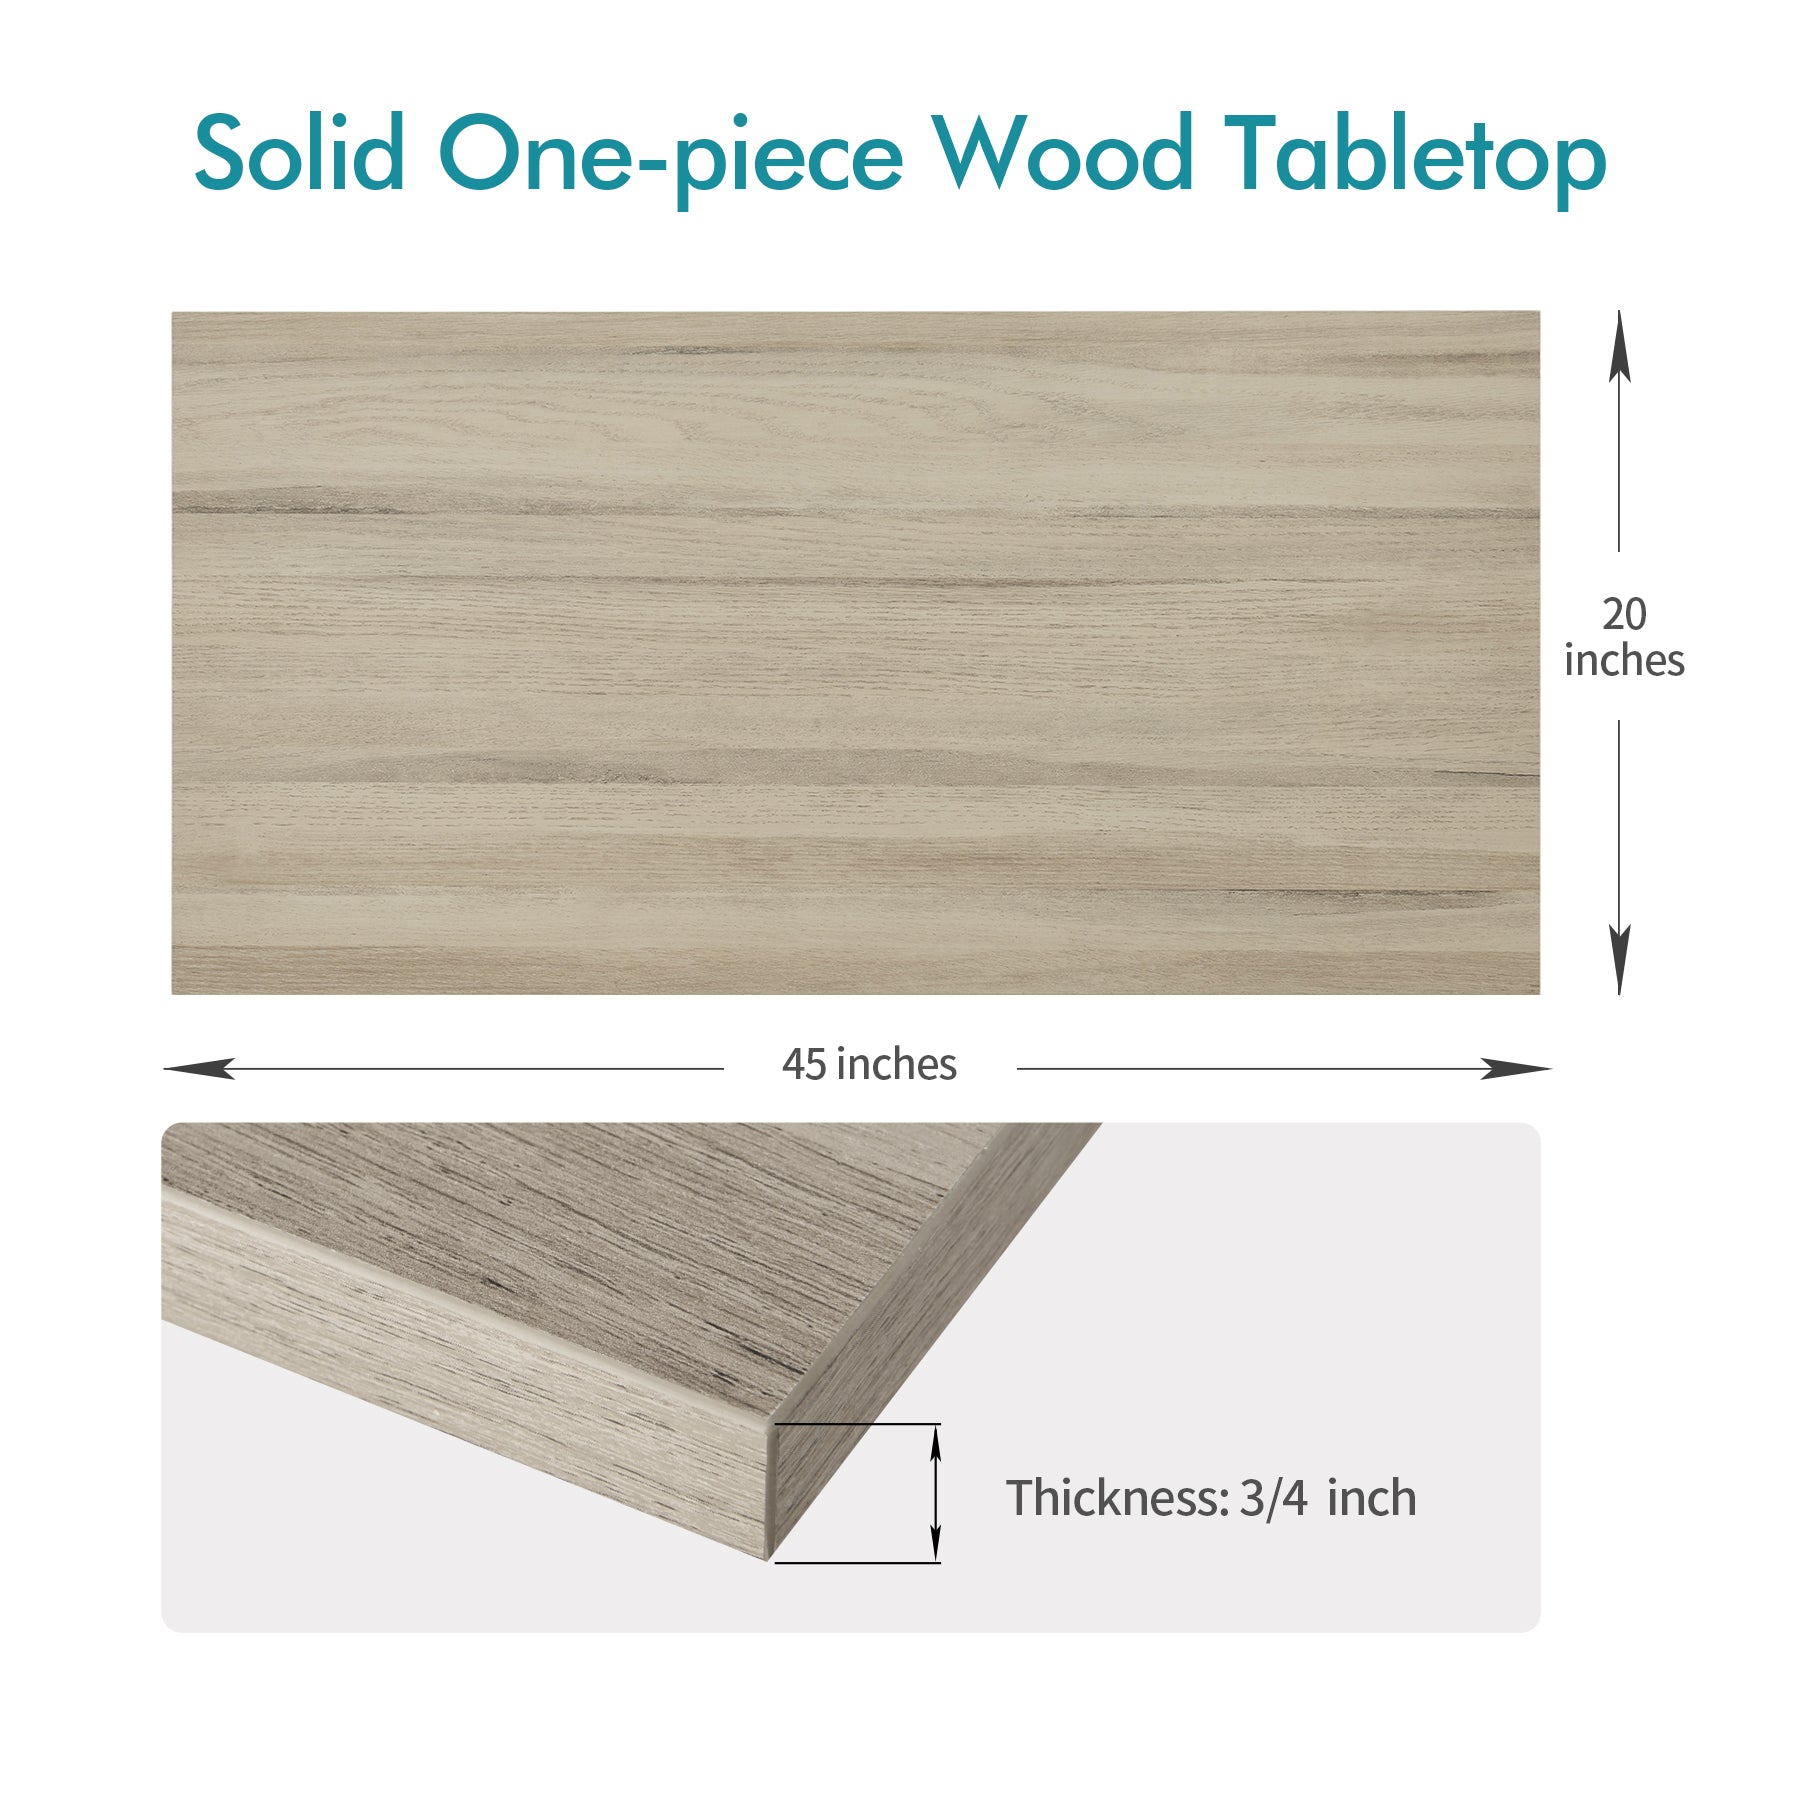 45x20 one-piece wood table top in oak